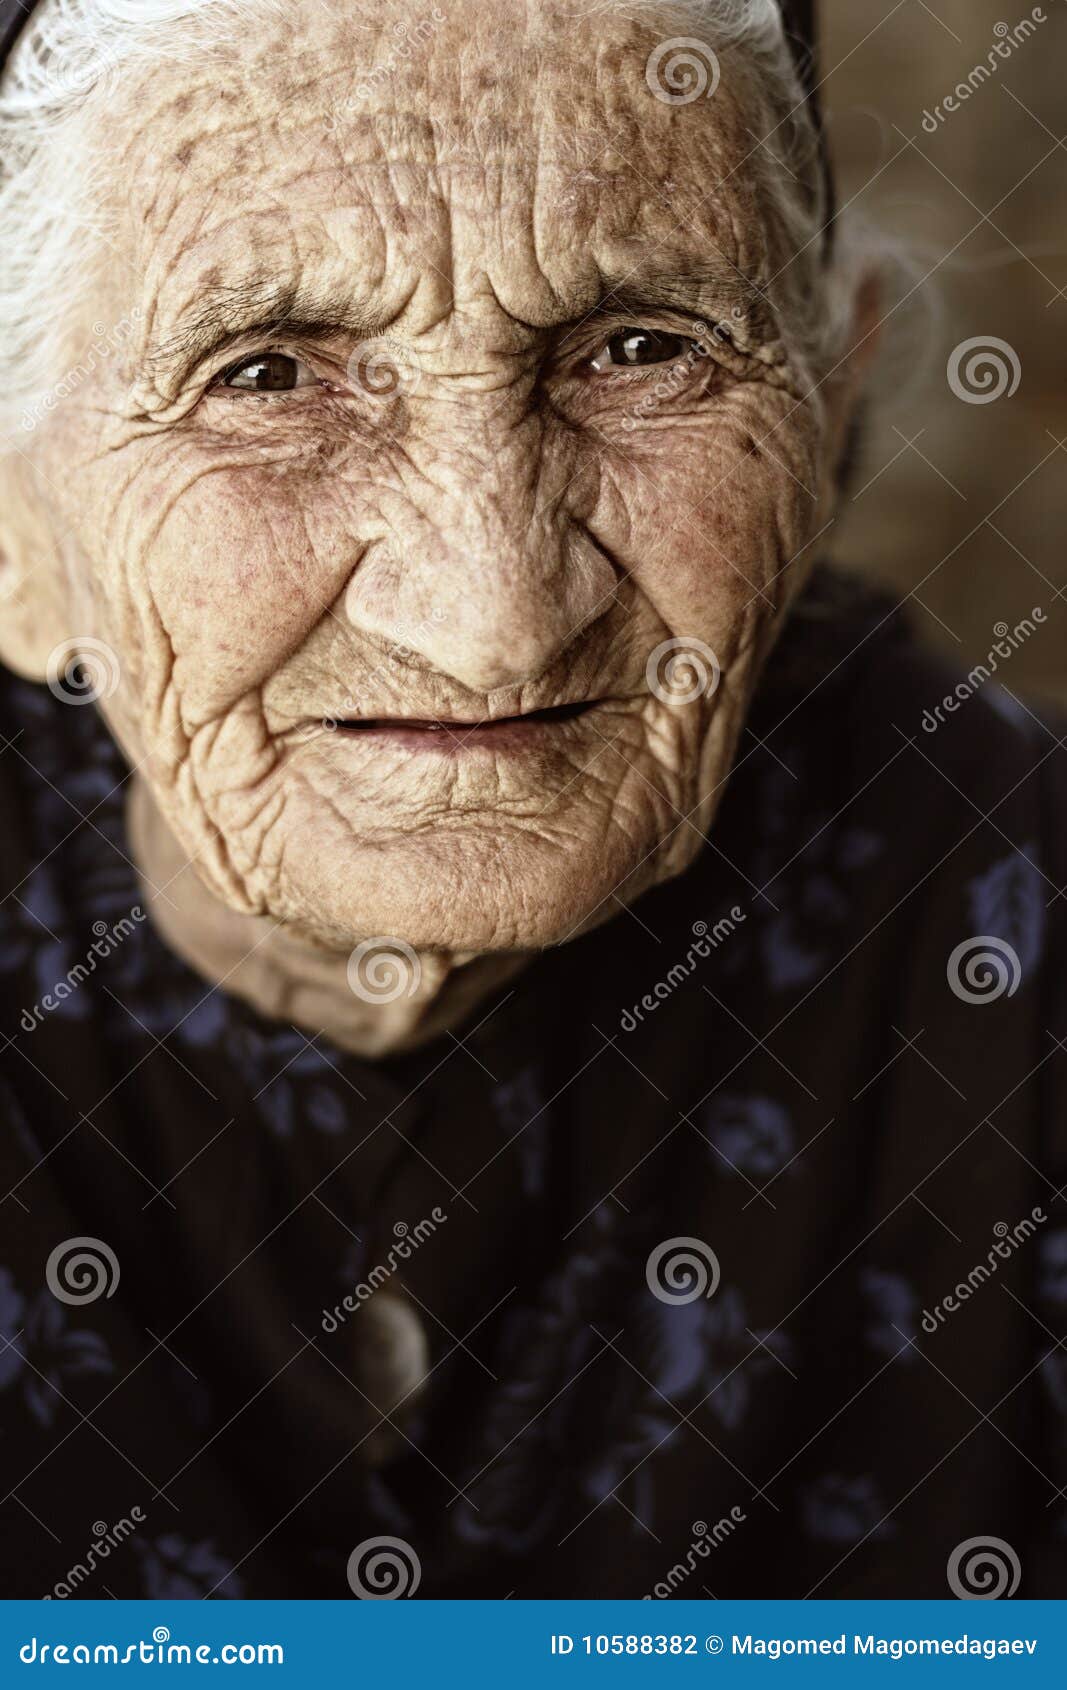 gaze of senior woman